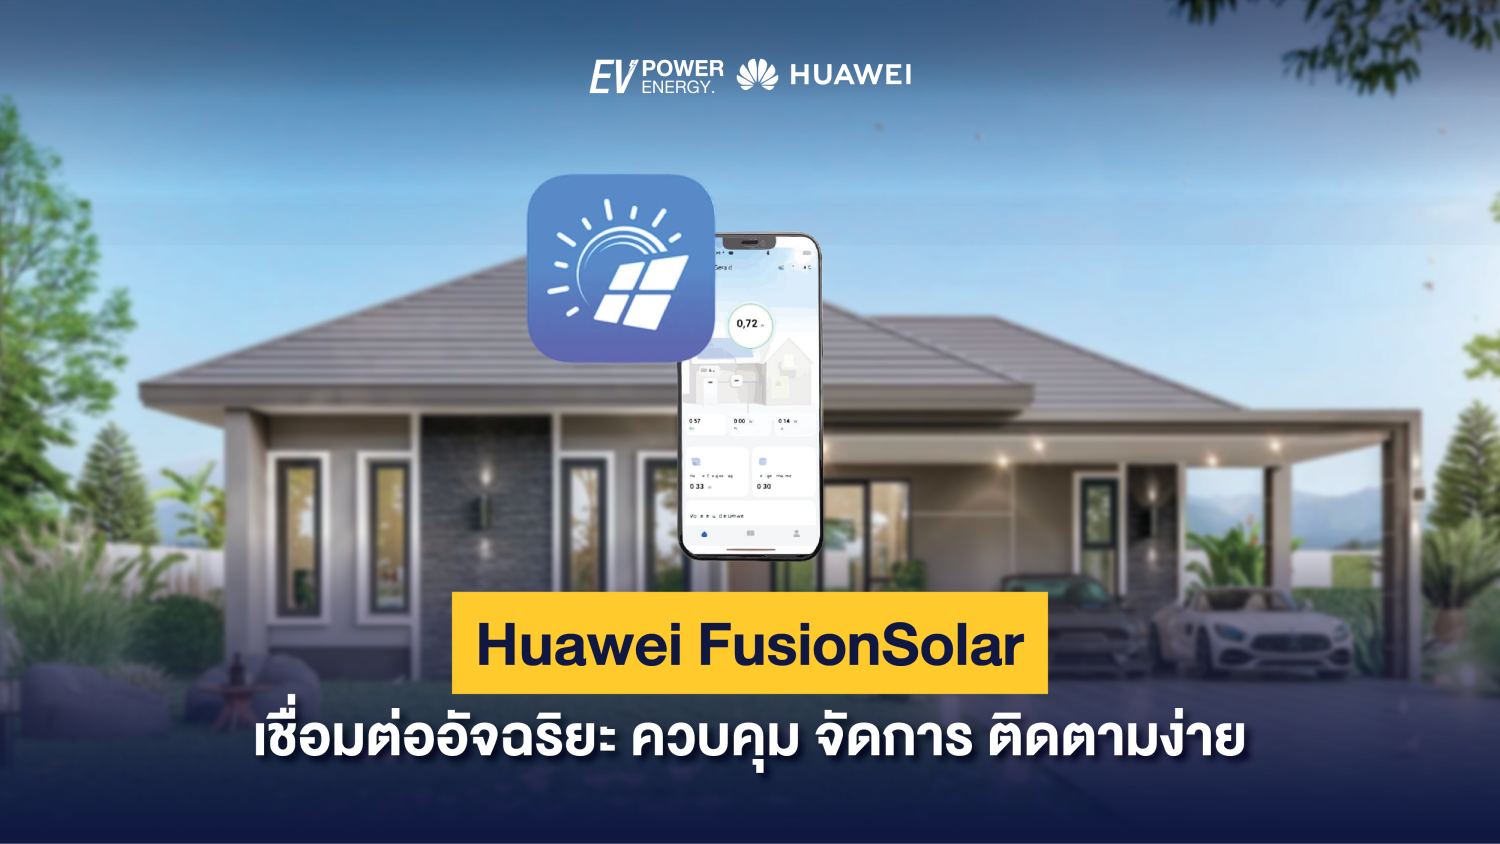 Huawei FusionSolar เชื่อมต่ออัจฉริยะ ควบคุม จัดการ ติดตามง่าย 1